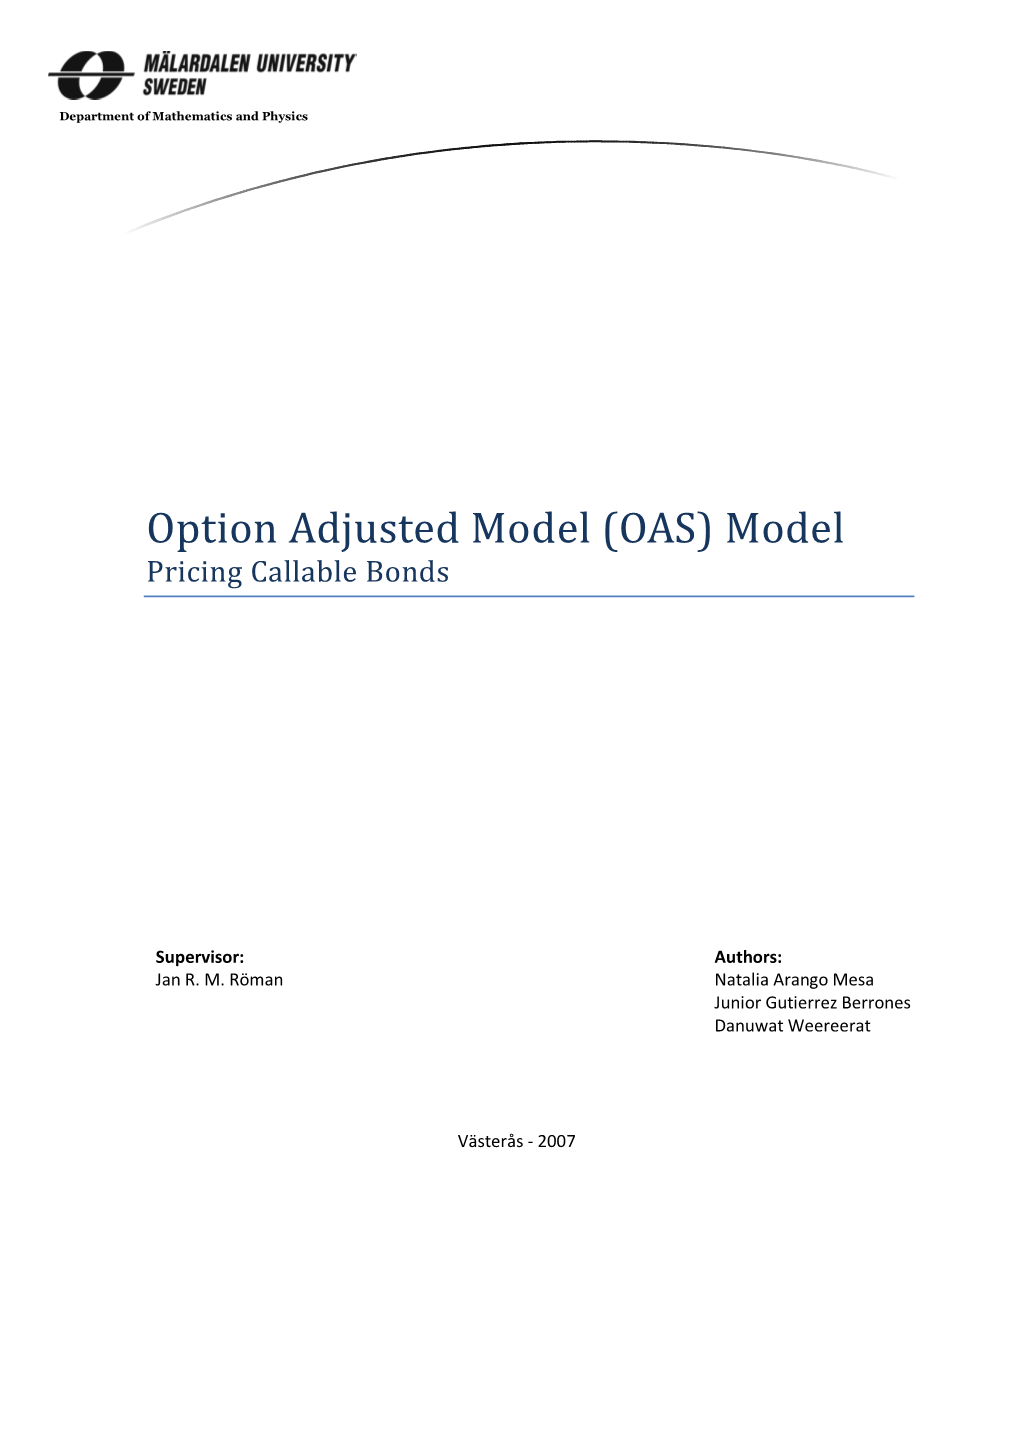 Option Adjusted Model (OAS) Model Pricing Callable Bonds